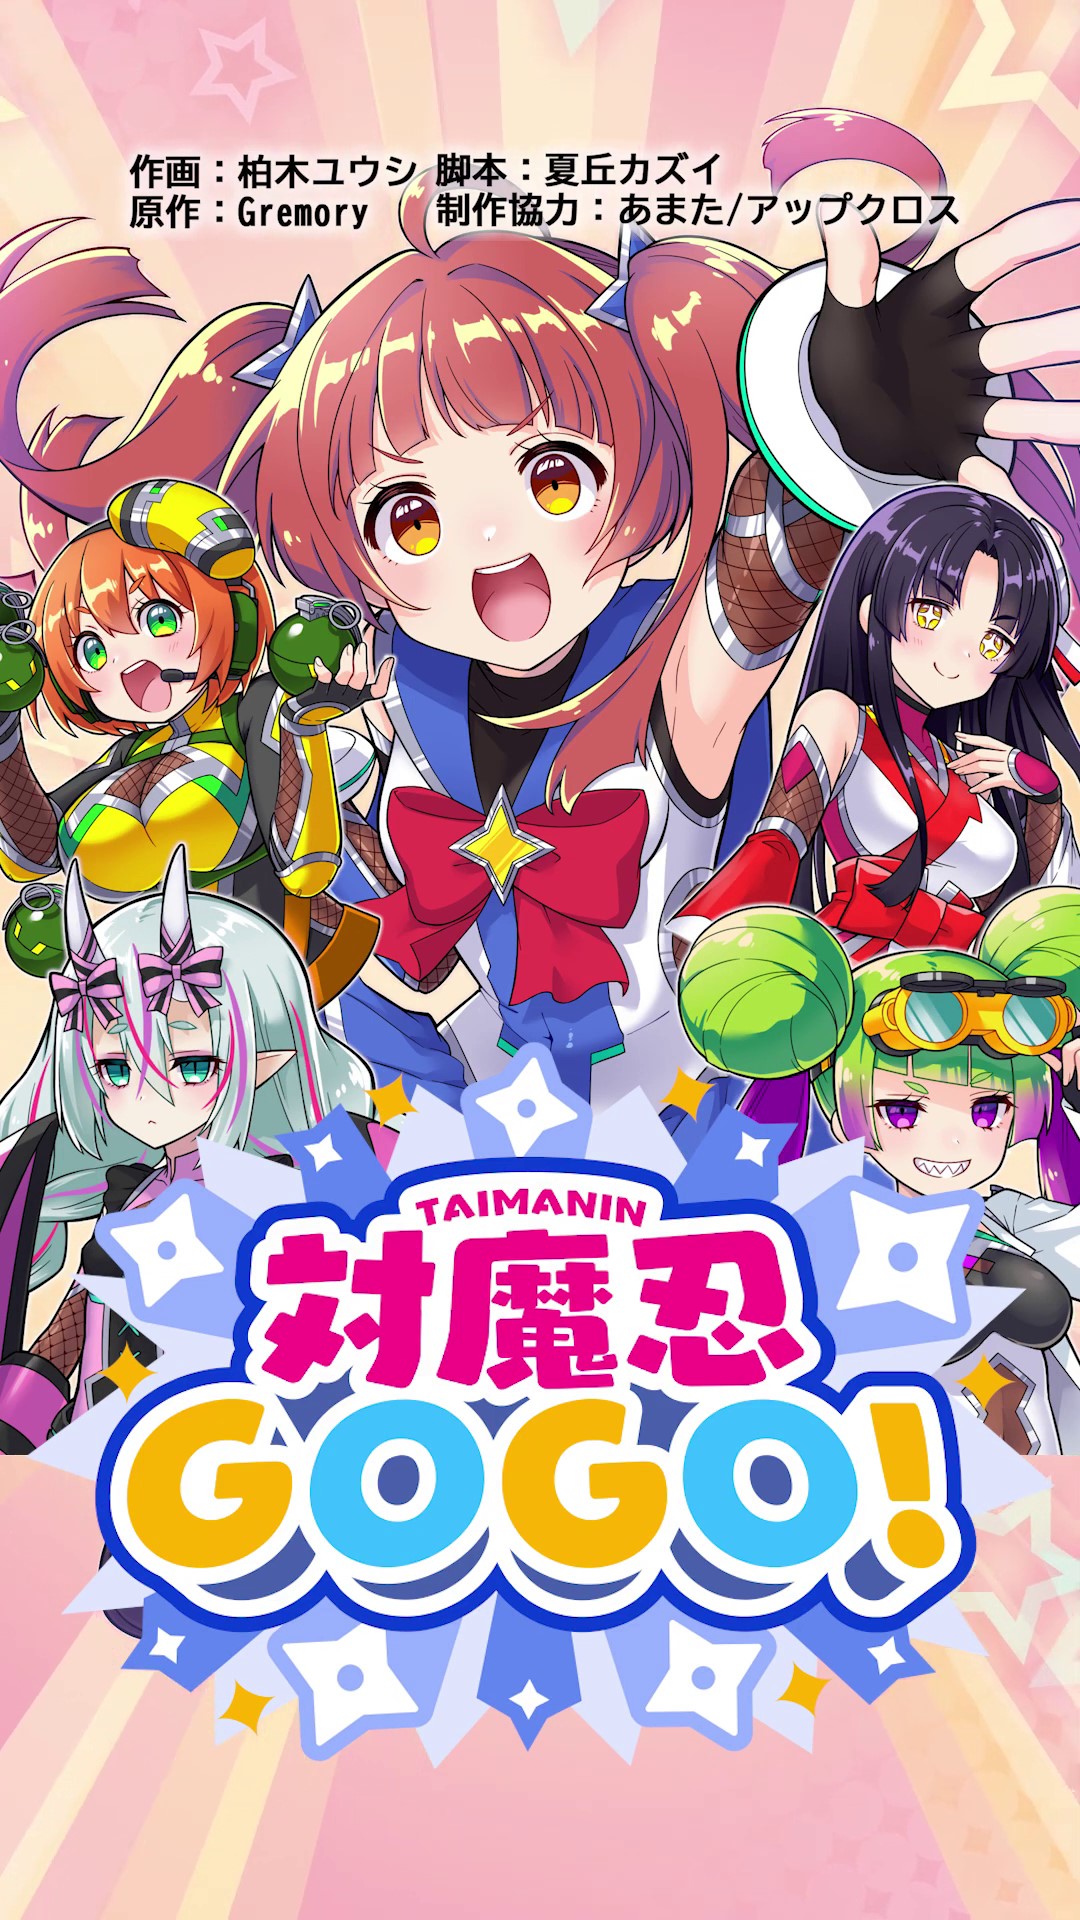 Taimanin GOGO! x Shin Ikkitousen Anime Collab begins on June 1